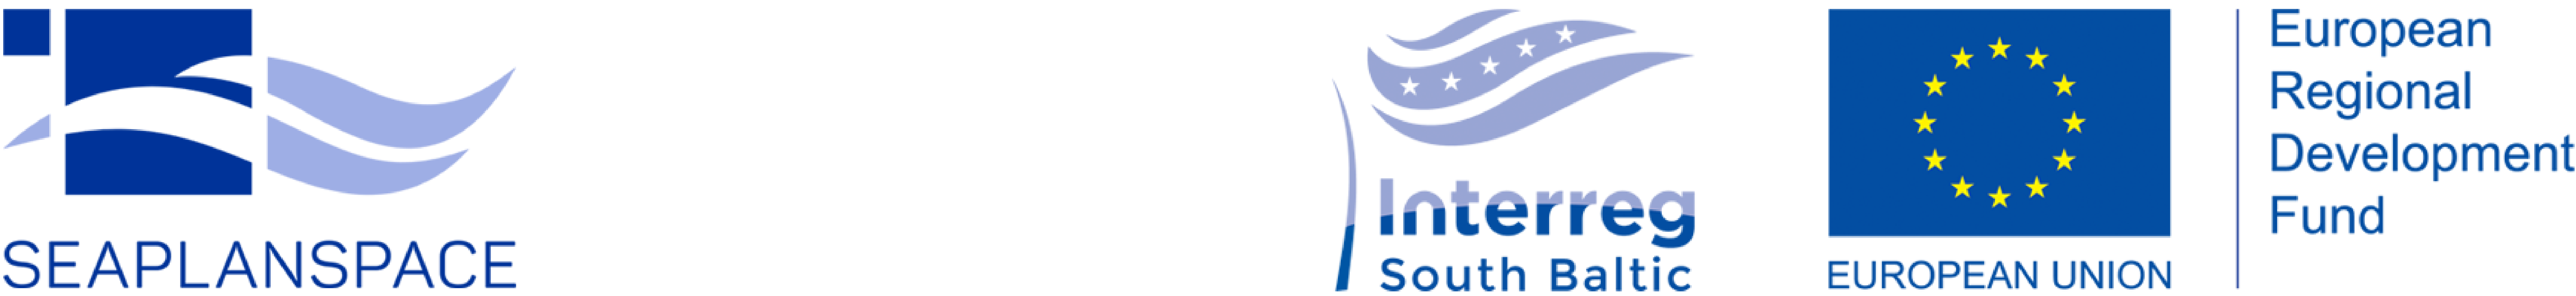 SEAPLANSPACE Logo